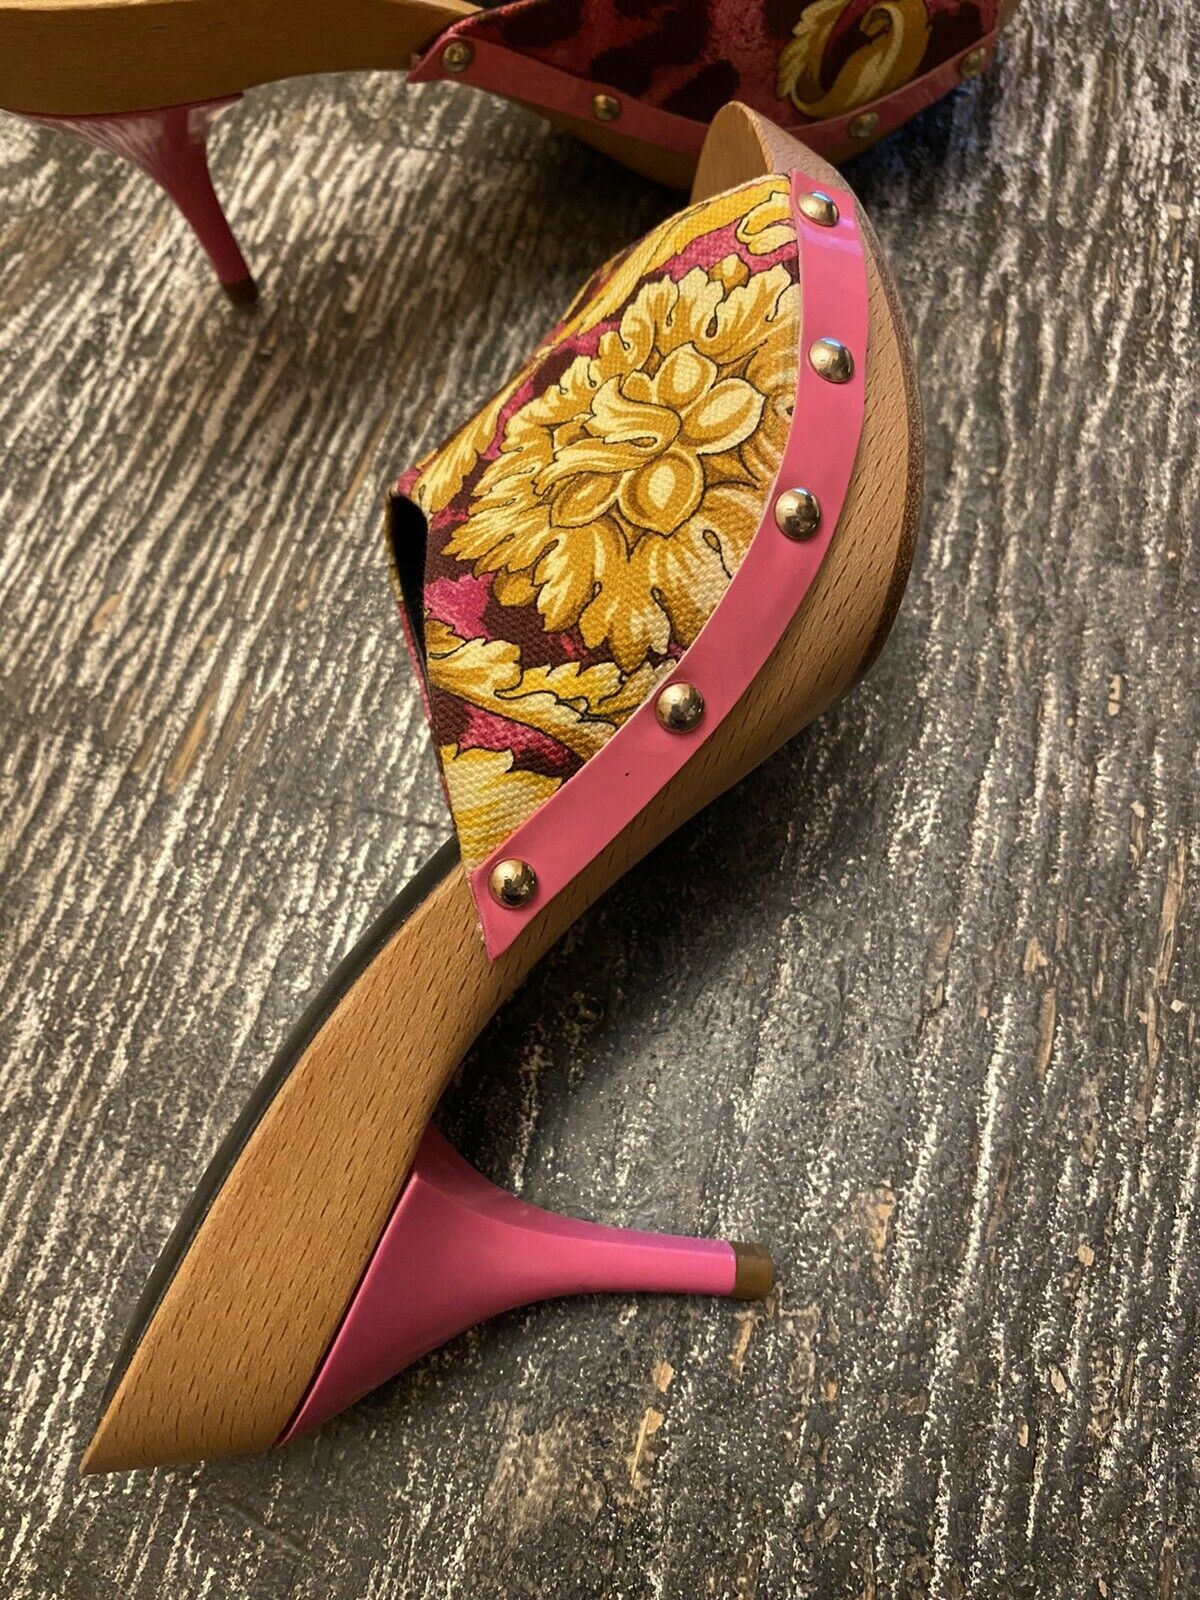 New Versace Women’s Sandal Shoes Multicolor 6 US ( 36 Eu ) Italy